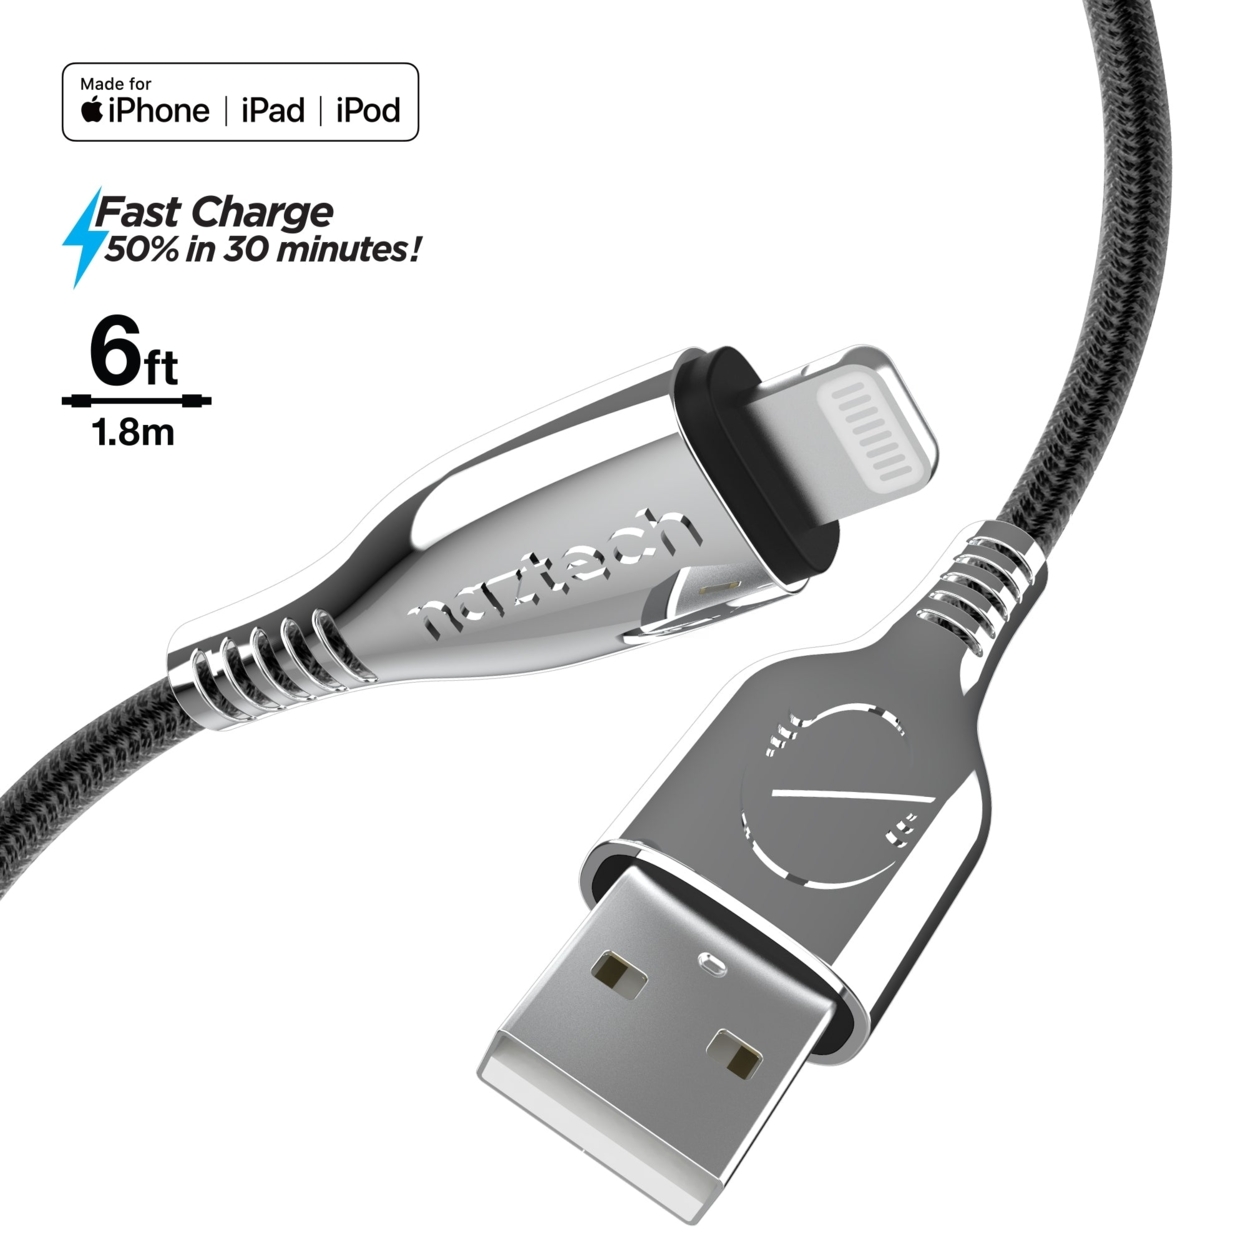 Naztech Titanium USB To MFi Lightning Braided Cable 6ft - Black